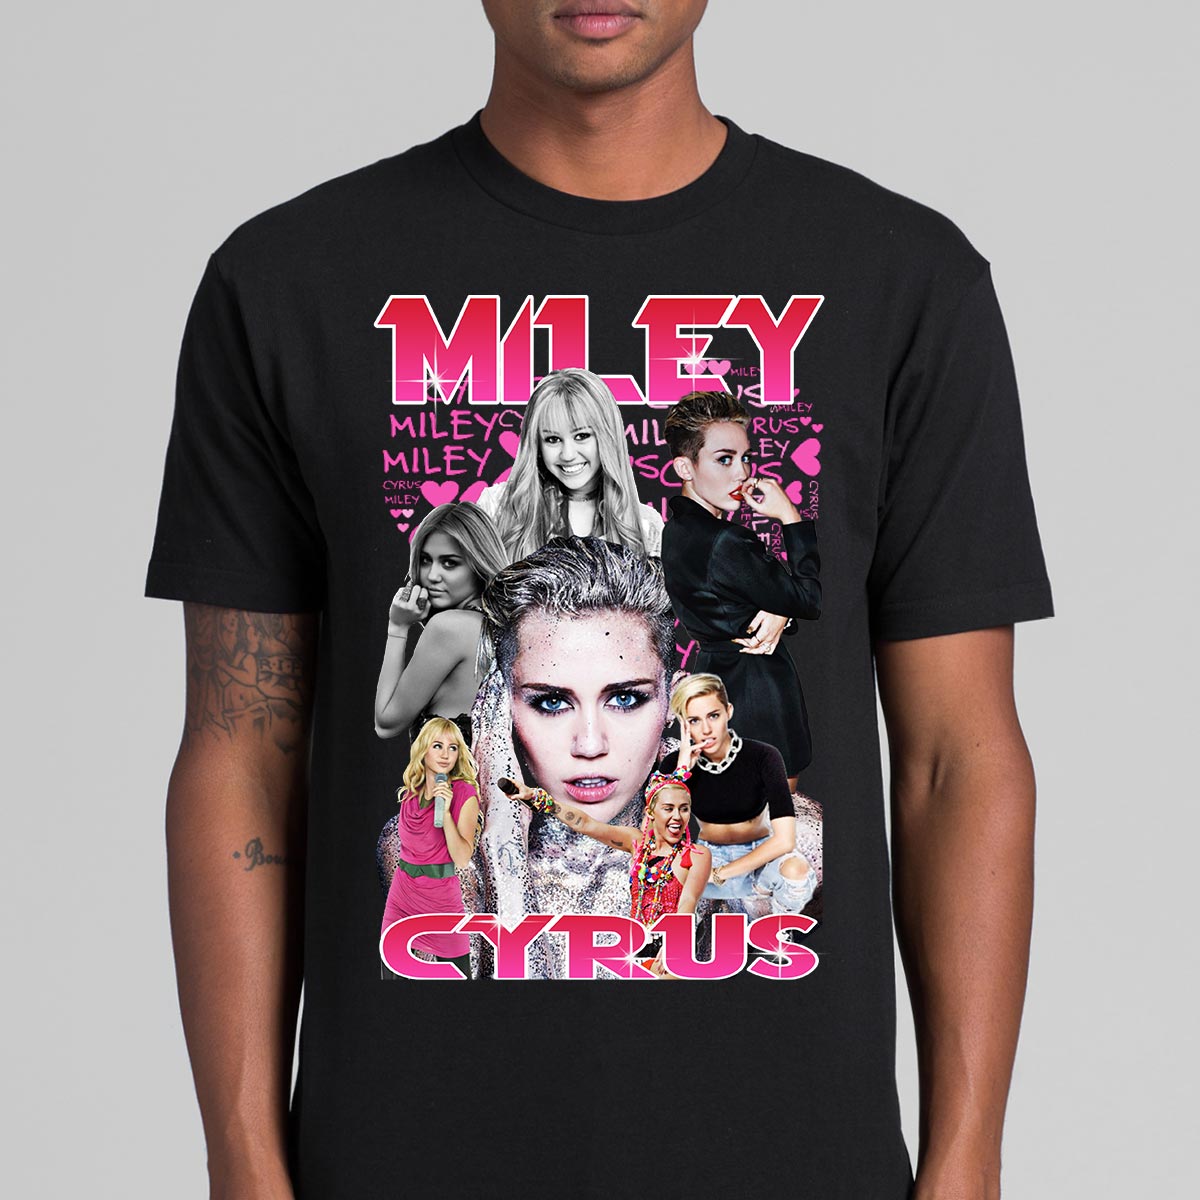 Miley Cyrus T-Shirt Artist Music Pop Culture